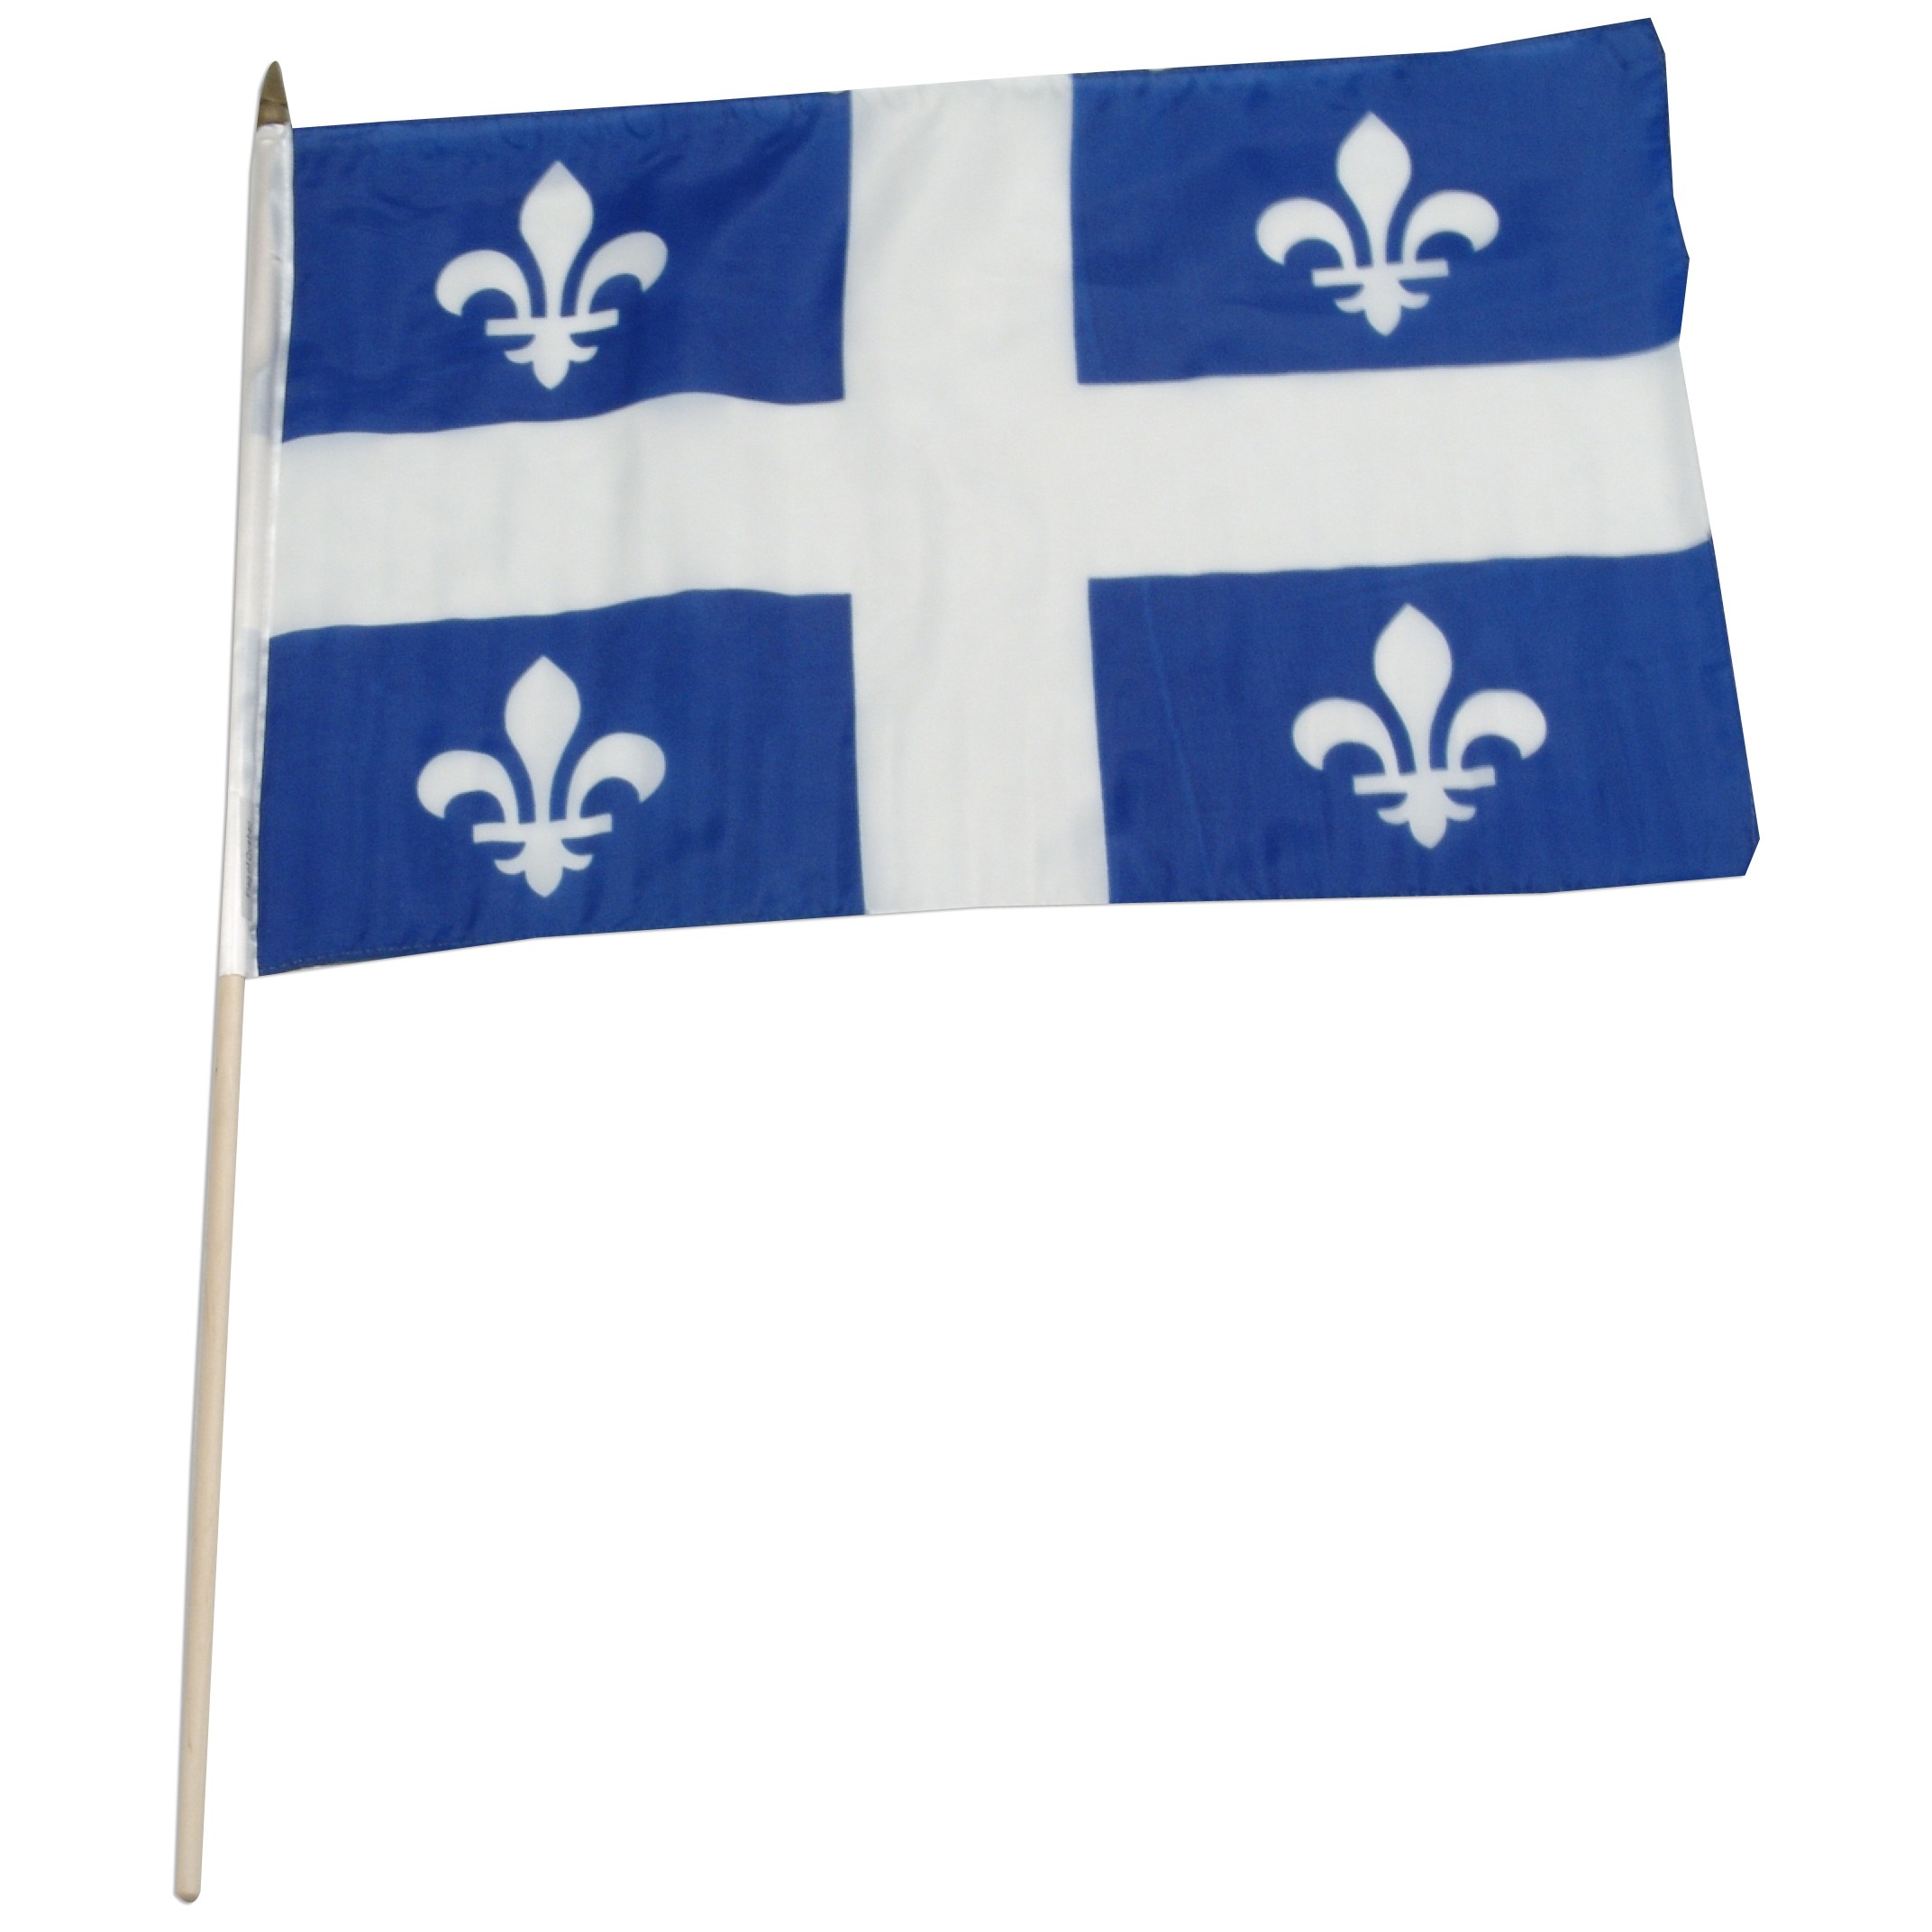 Quebec Flag 12 x 18 inch